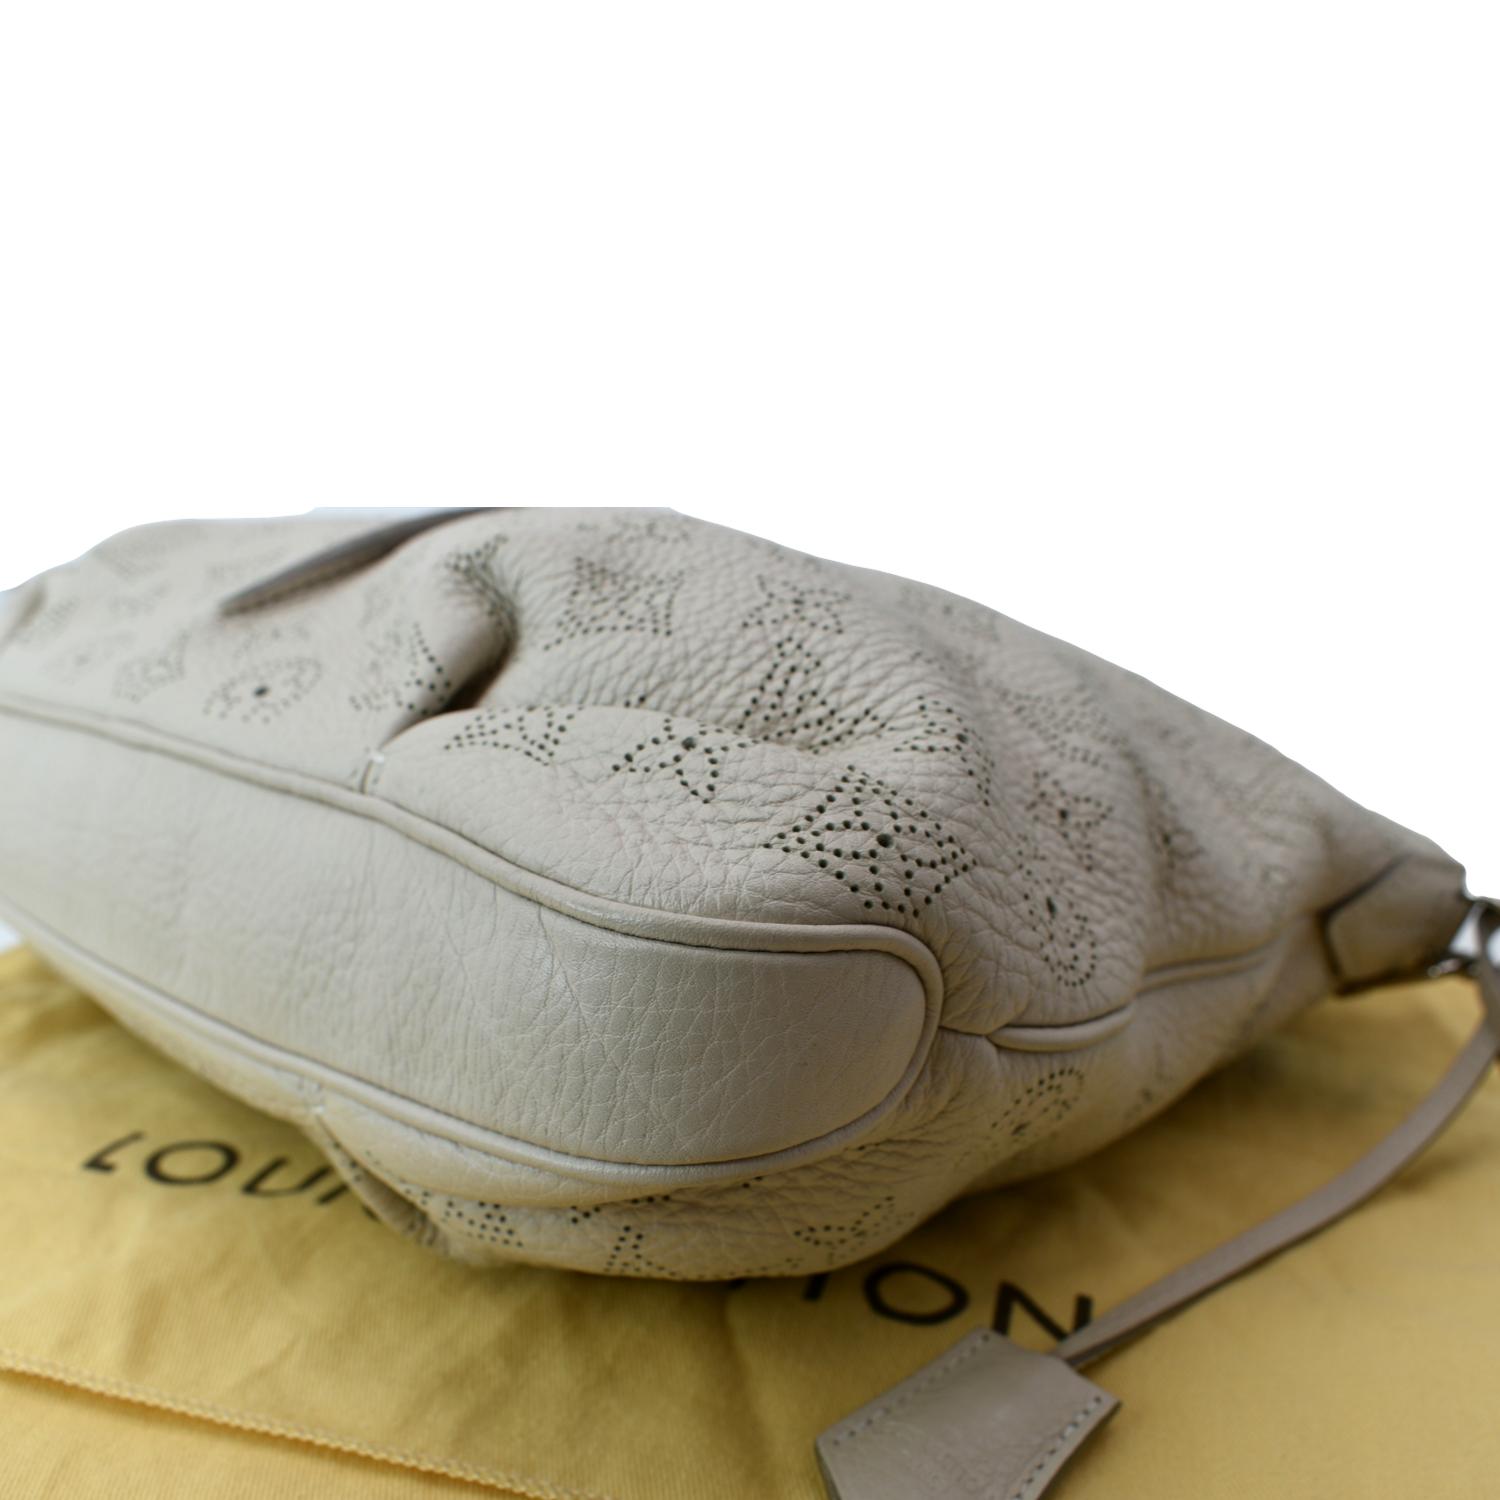 Louis Vuitton Selene Shoulder bag 381157